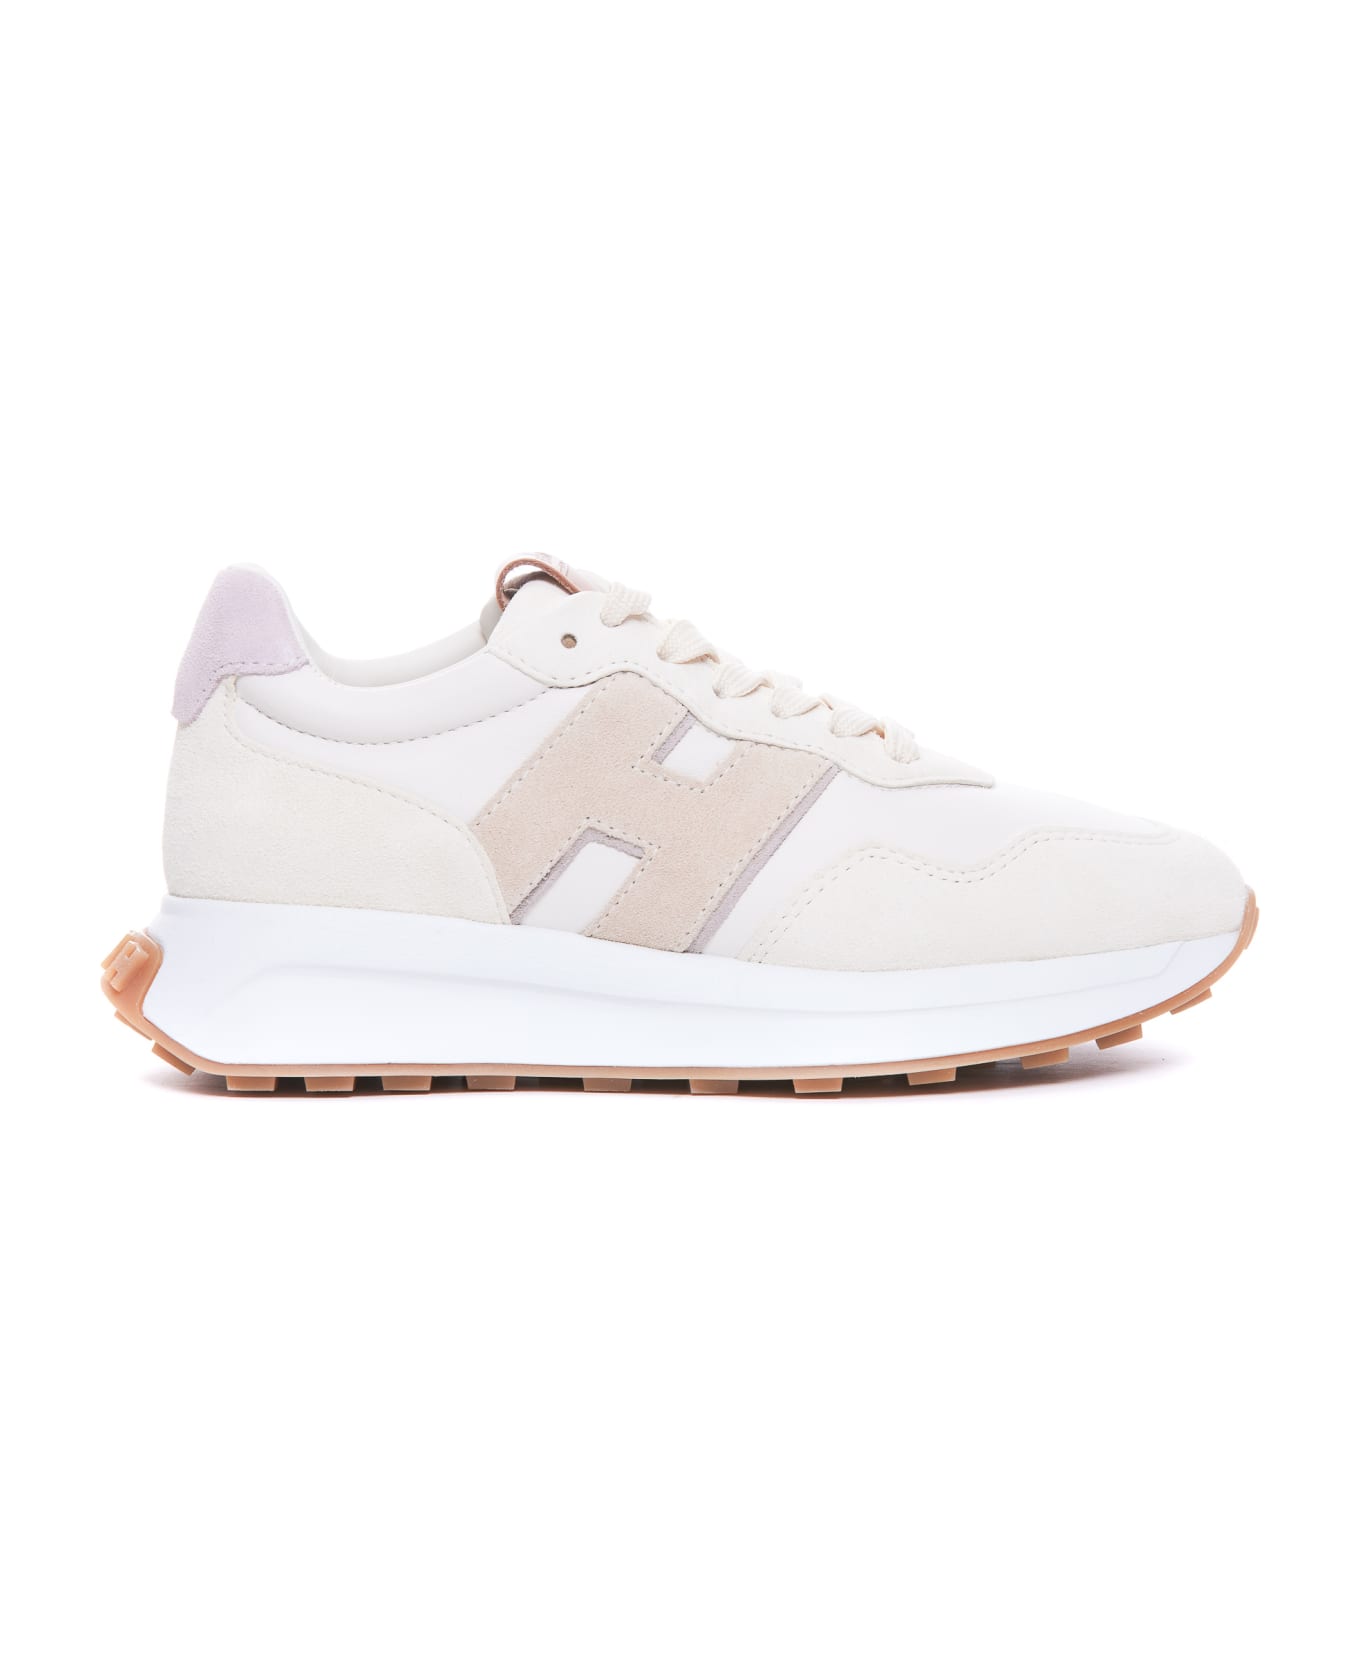 Hogan H641 Sneakers - Nude & Neutrals